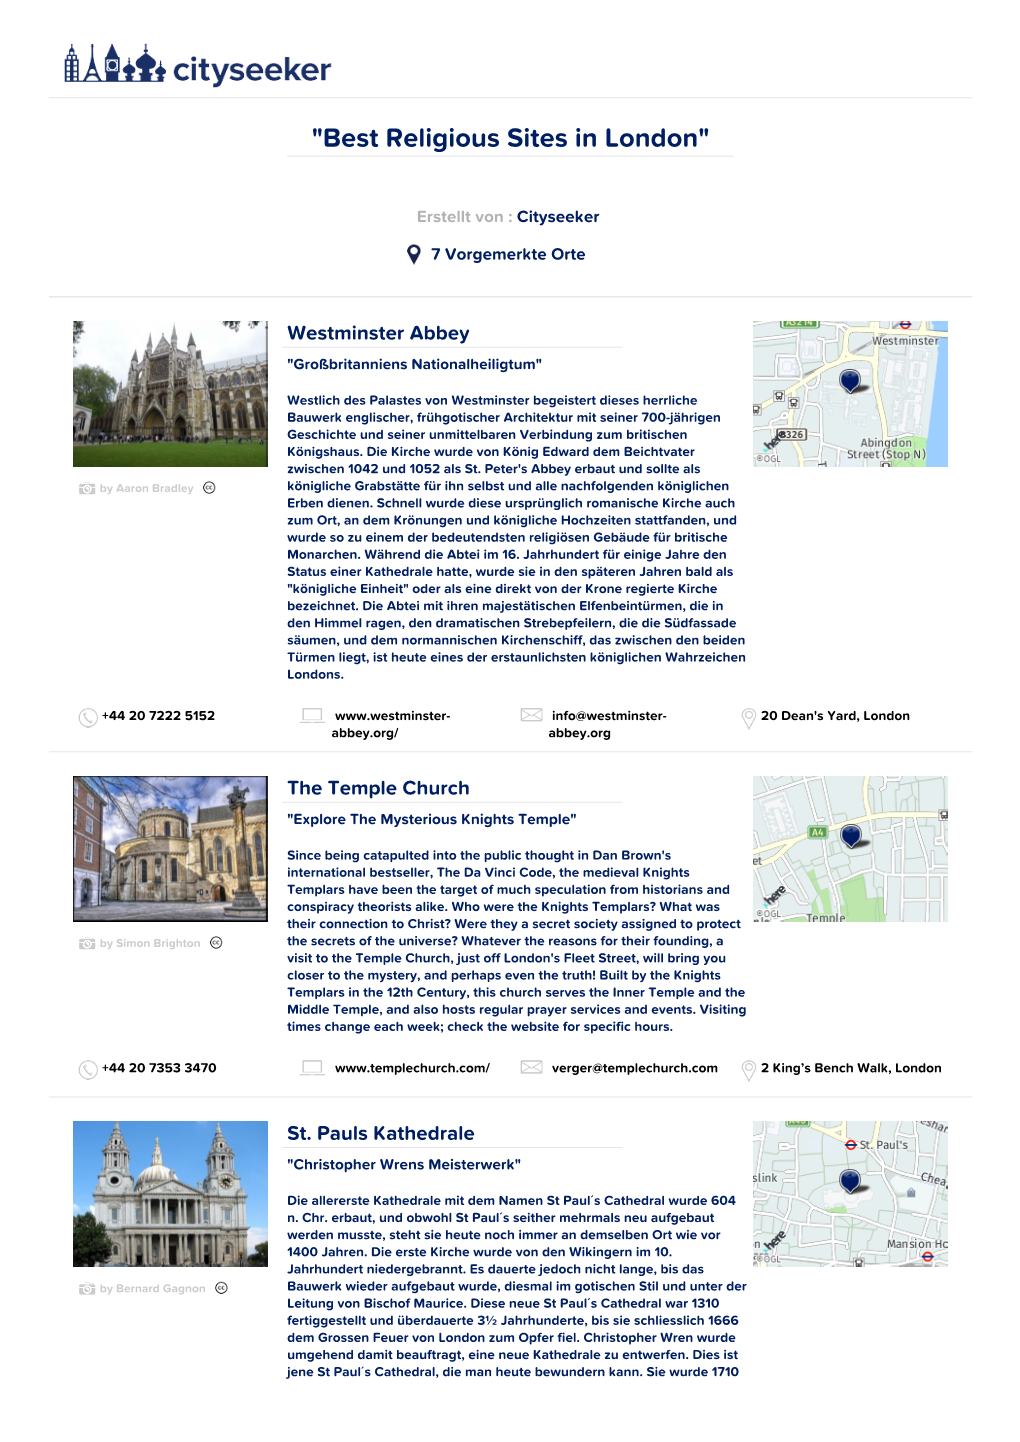 Best Religious Sites in London"